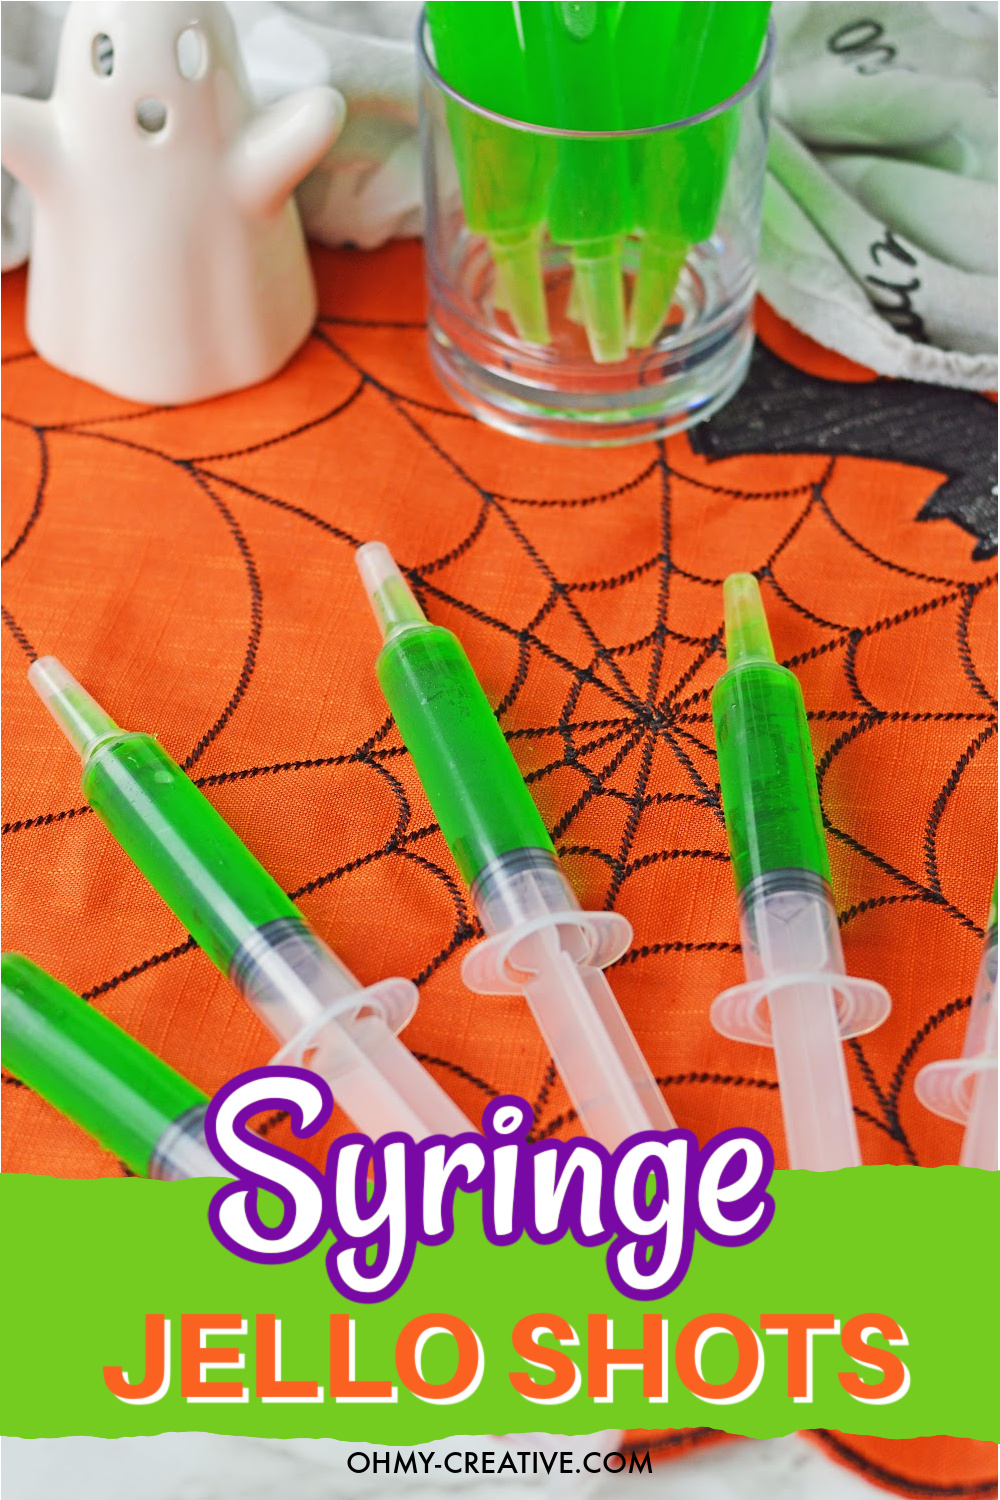 Green syringe jello shots laying on an orange spiderweb placemat.